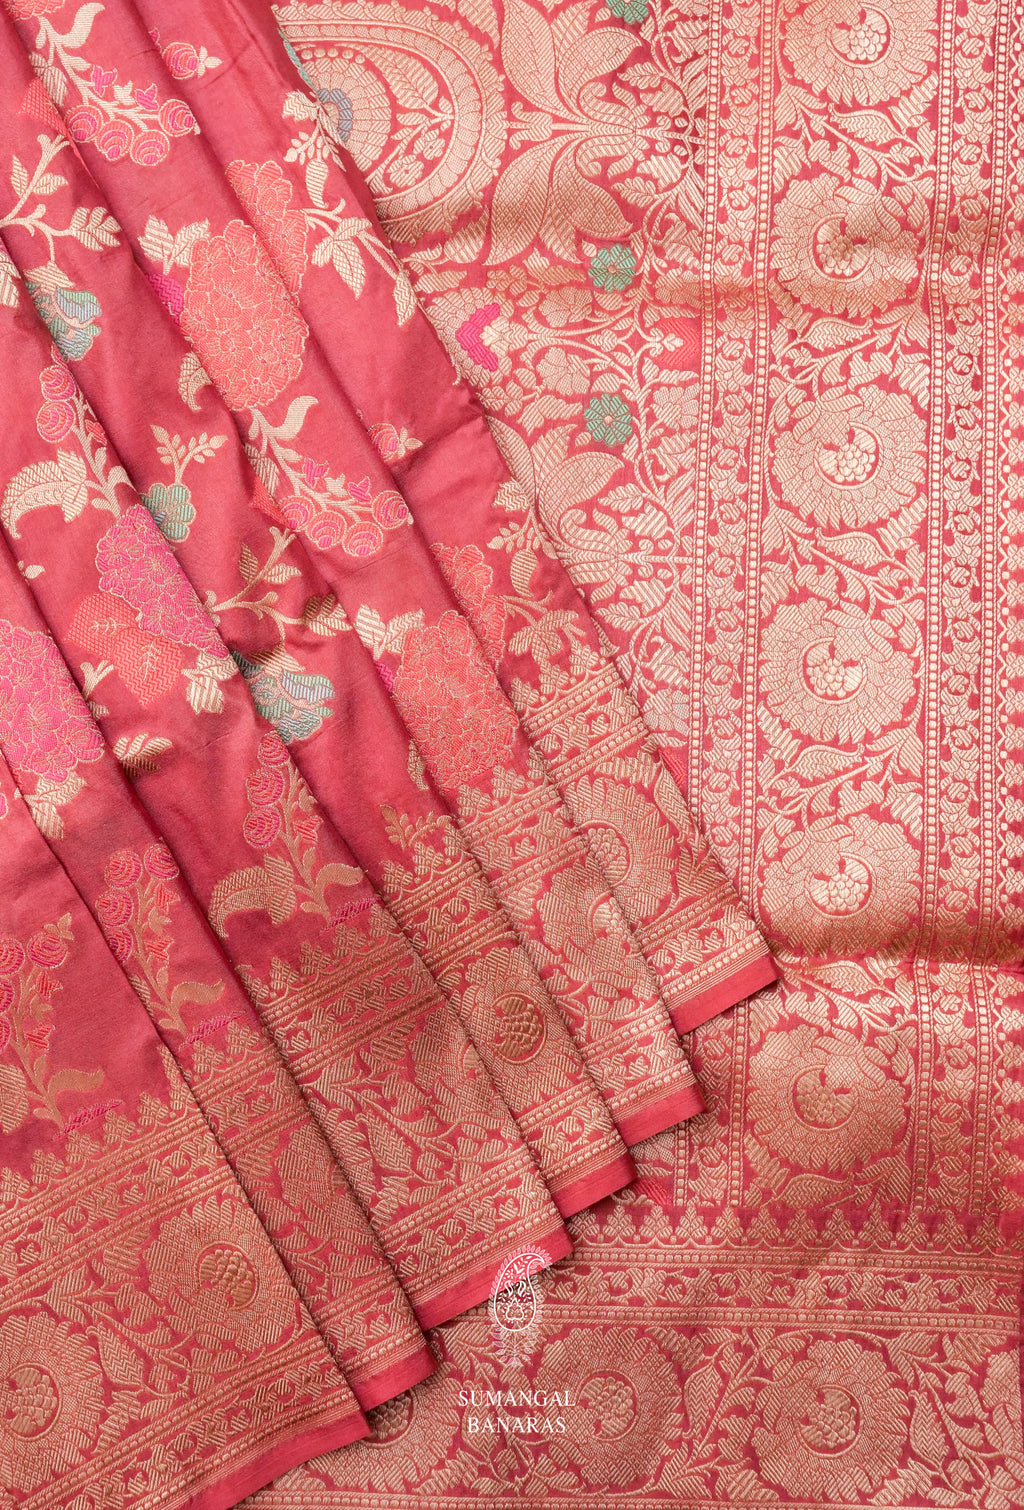 Handwoven Banarsi Muted Pink Katan Silk Saree